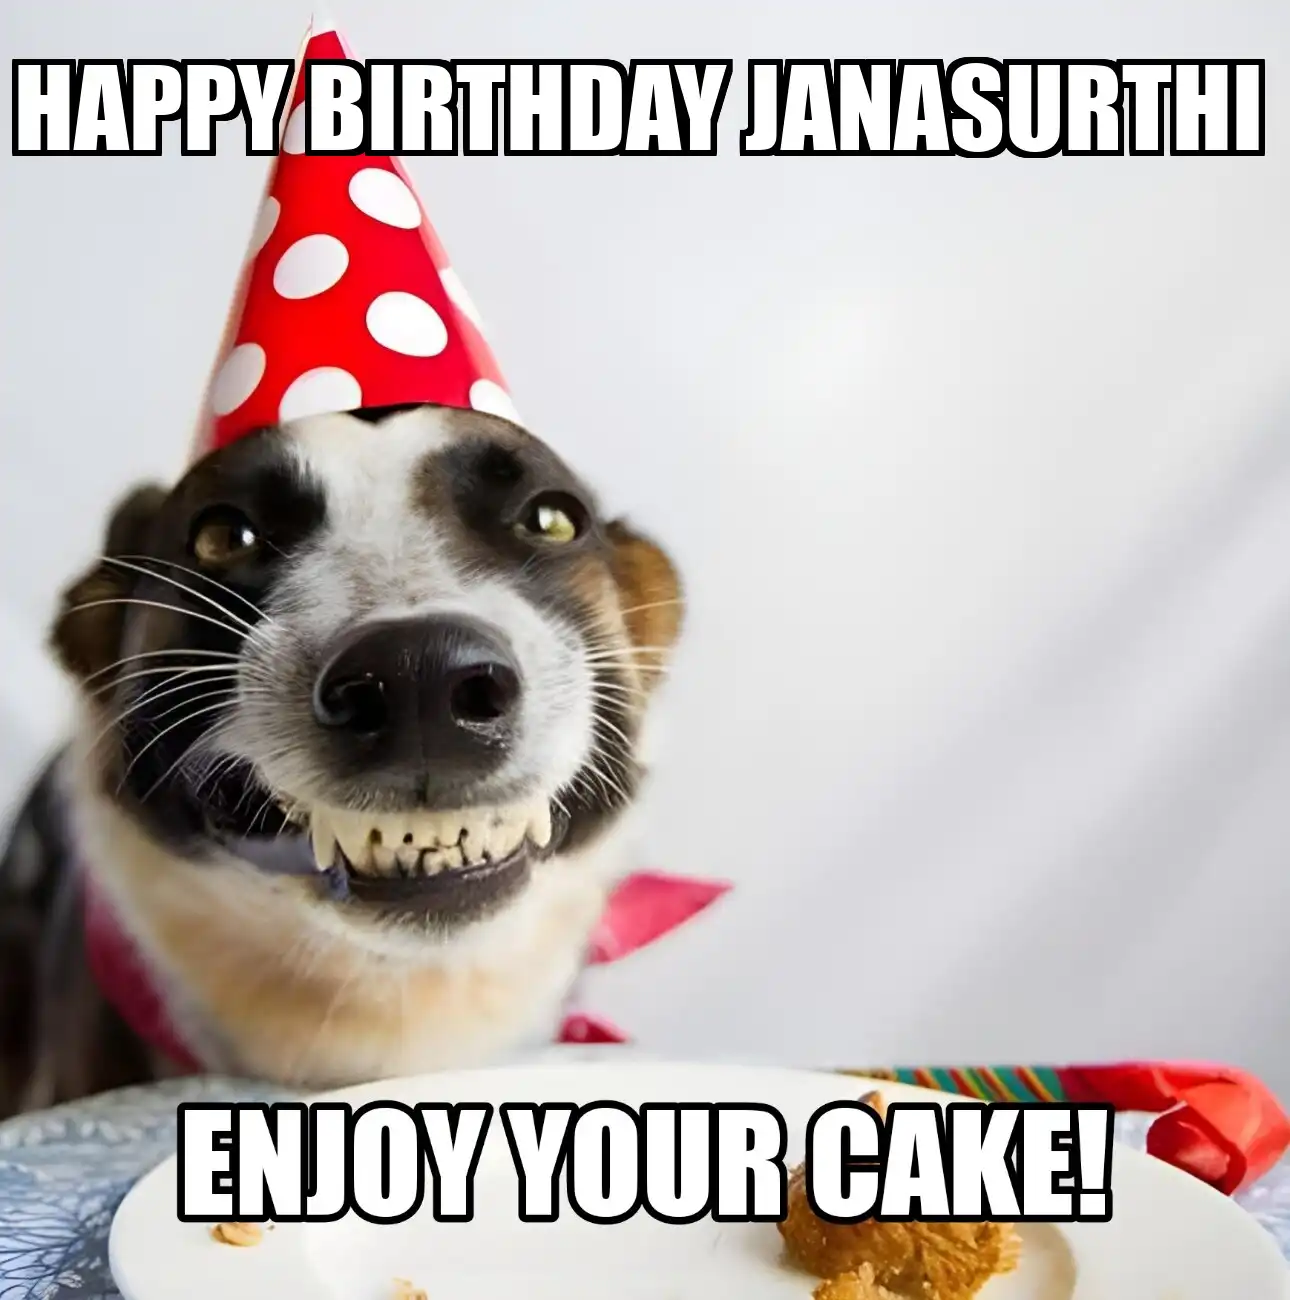 Happy Birthday Janasurthi Enjoy Your Cake Dog Meme